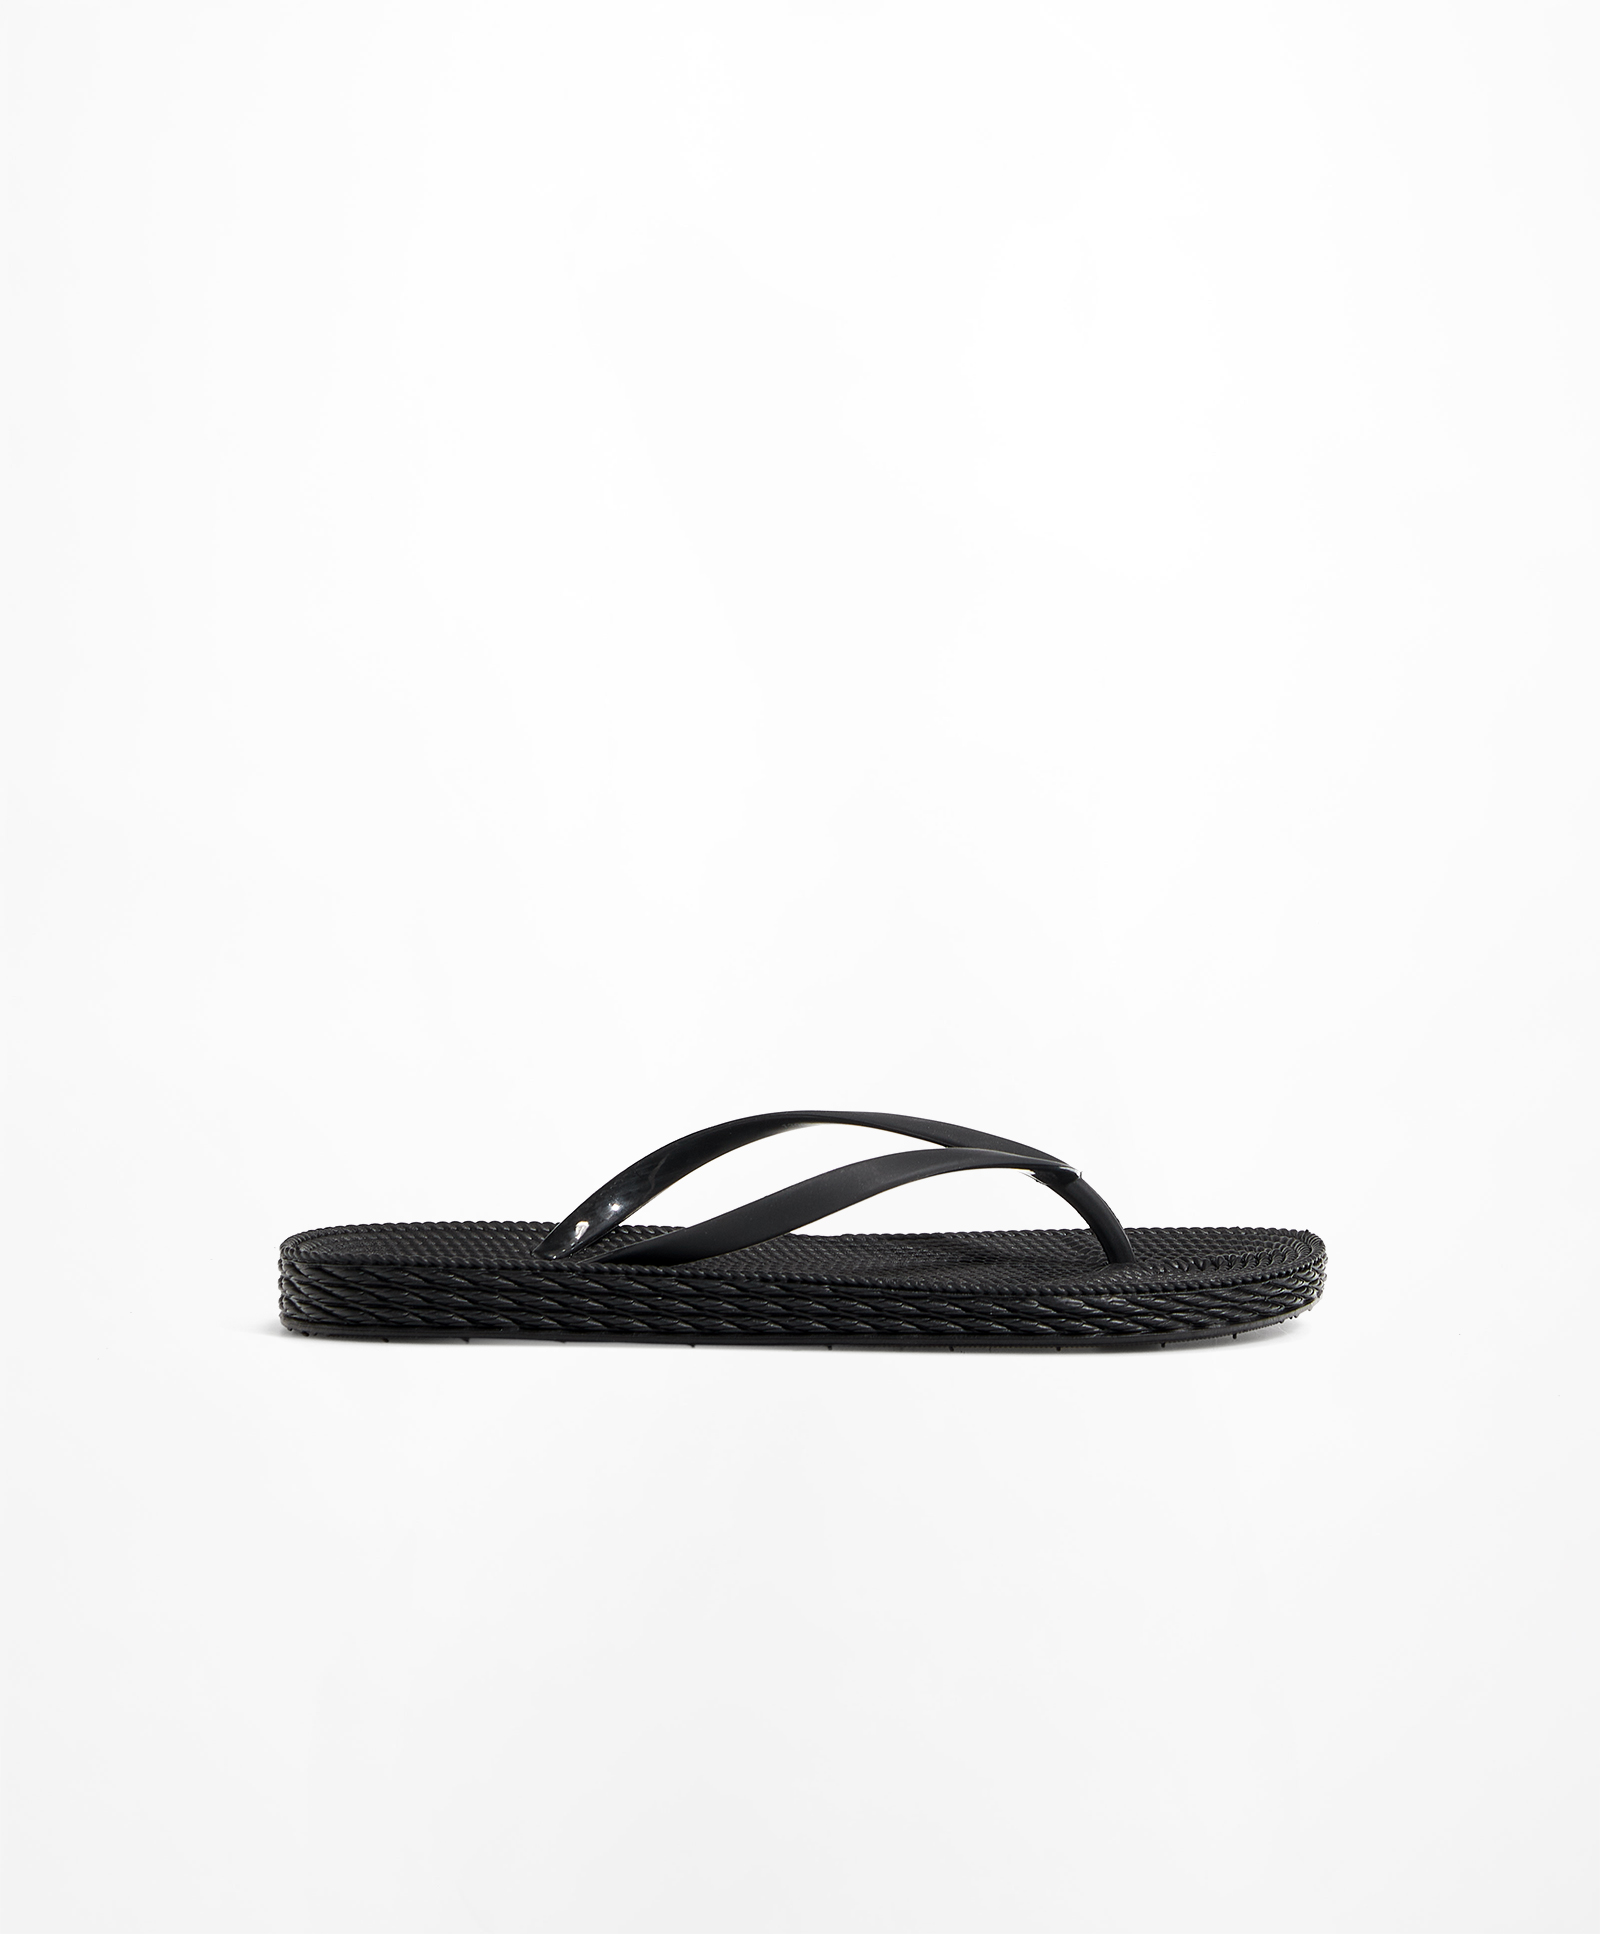 Textured shiny beach sandals